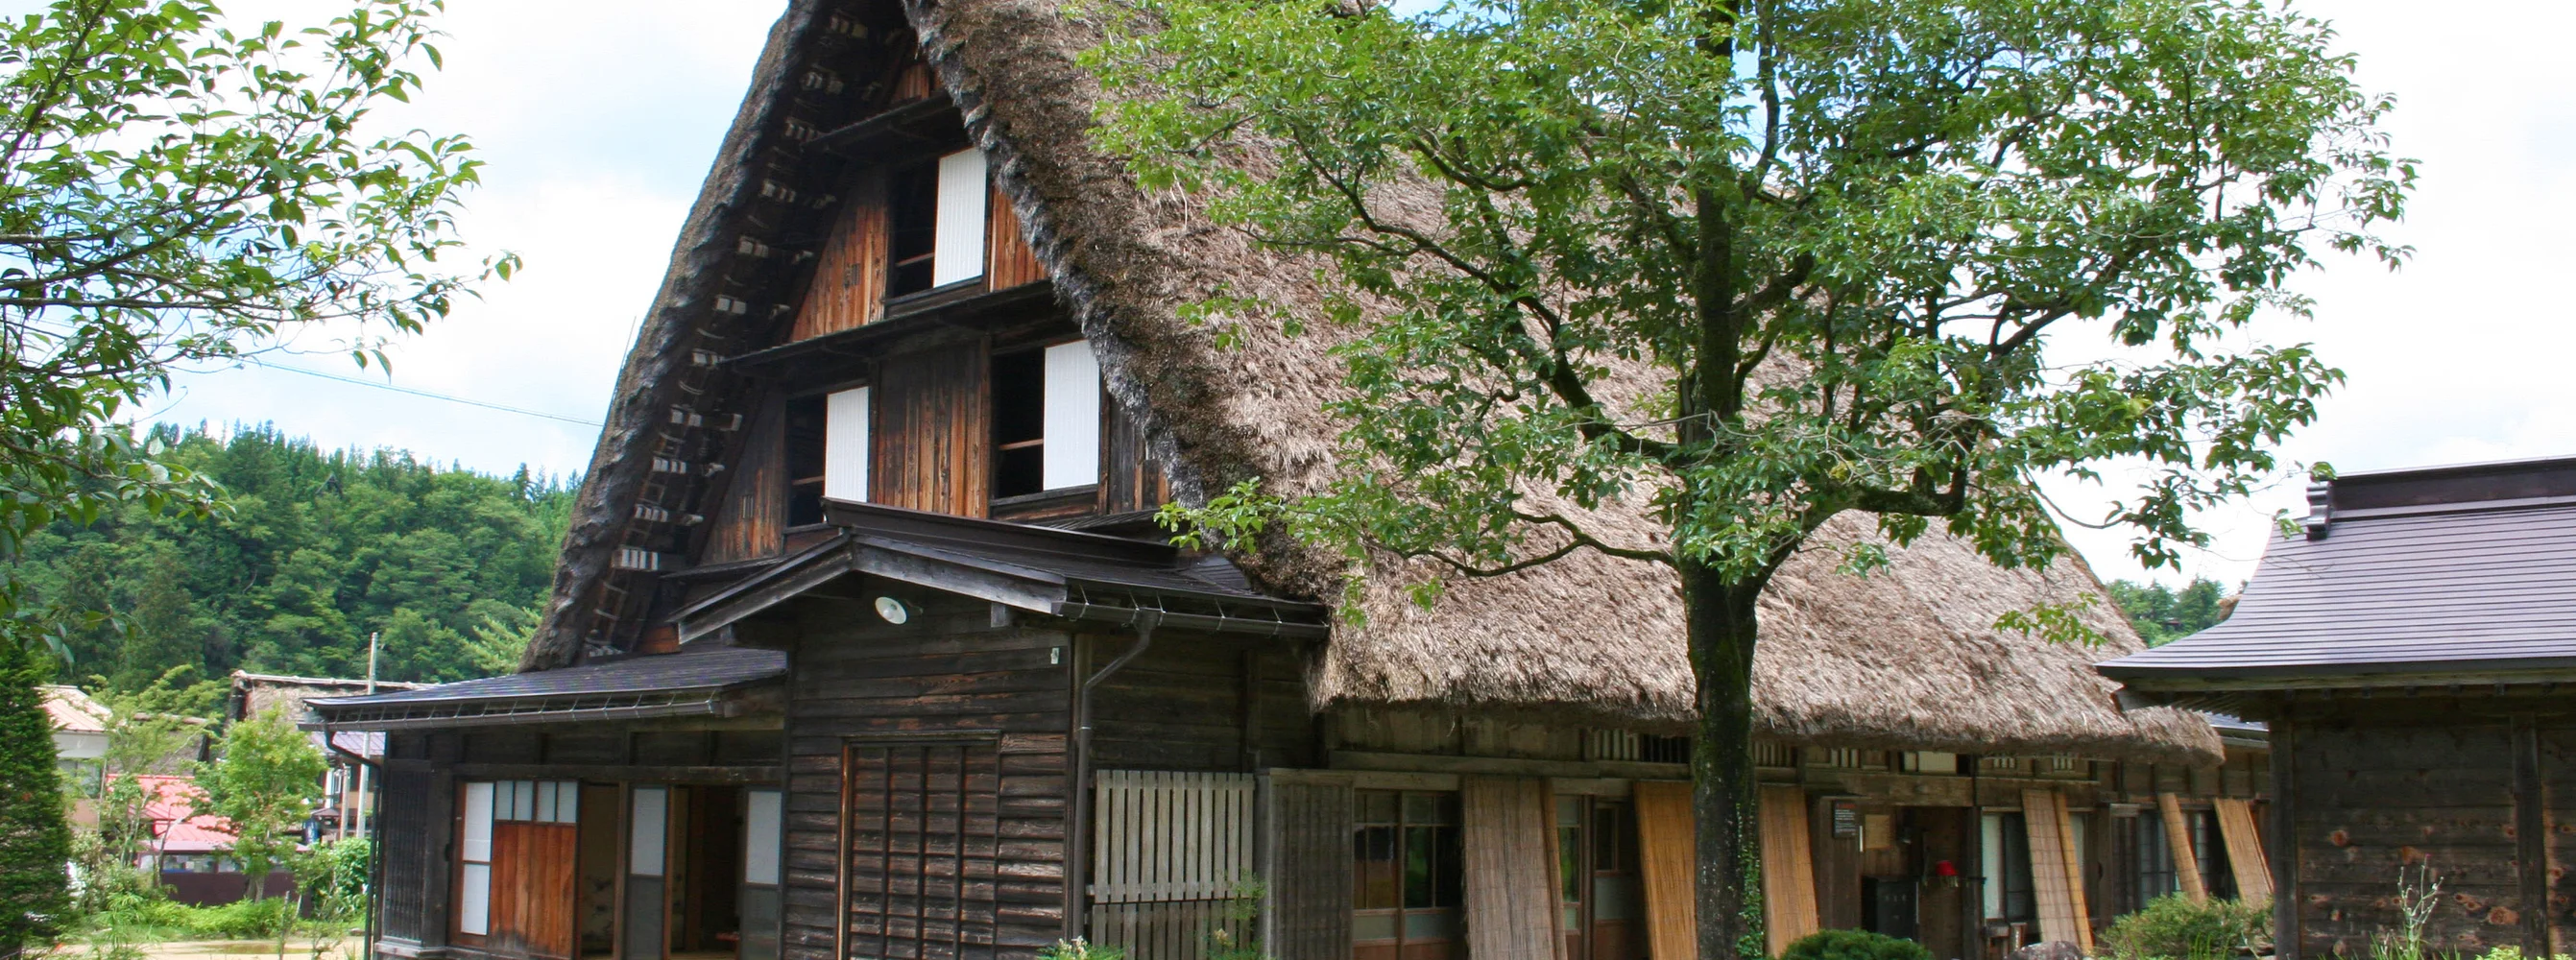 Kanda House Private Tour & Mochi Baking in Shirakawa-go